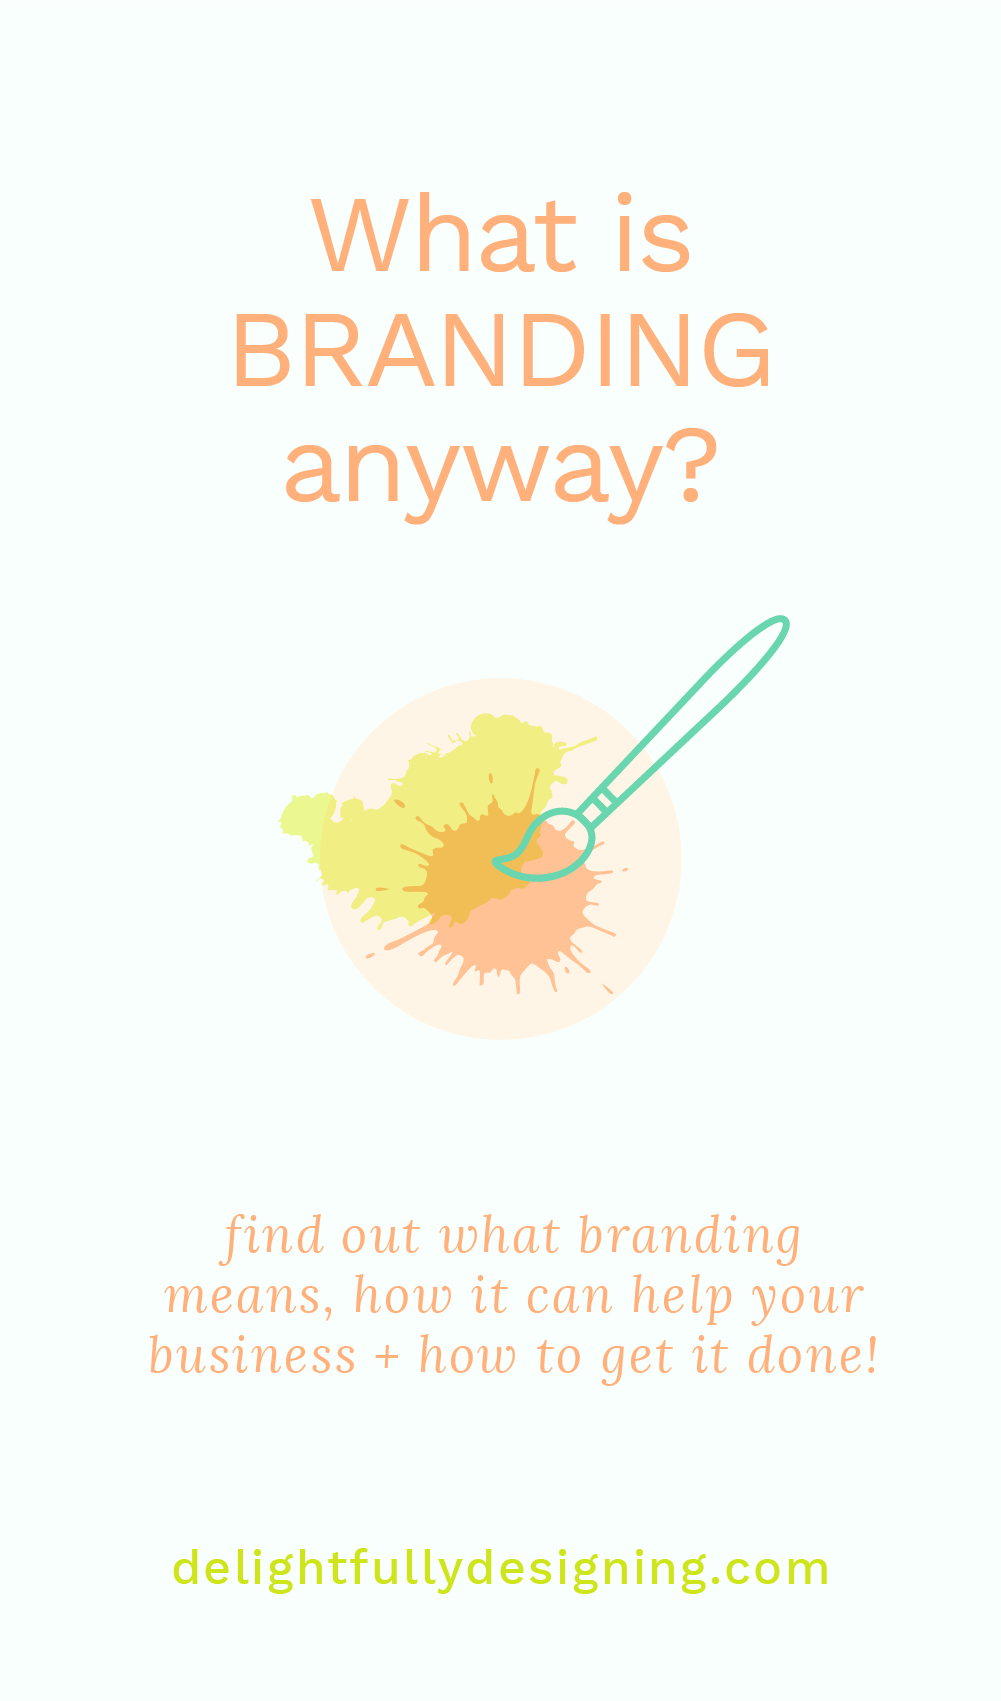 What is branding?, what is branding, branding, brand, brand my business, branding my business, branding myself, how do I brand my business, how do I brand myself, tips for branding, tips for brand design, brand design